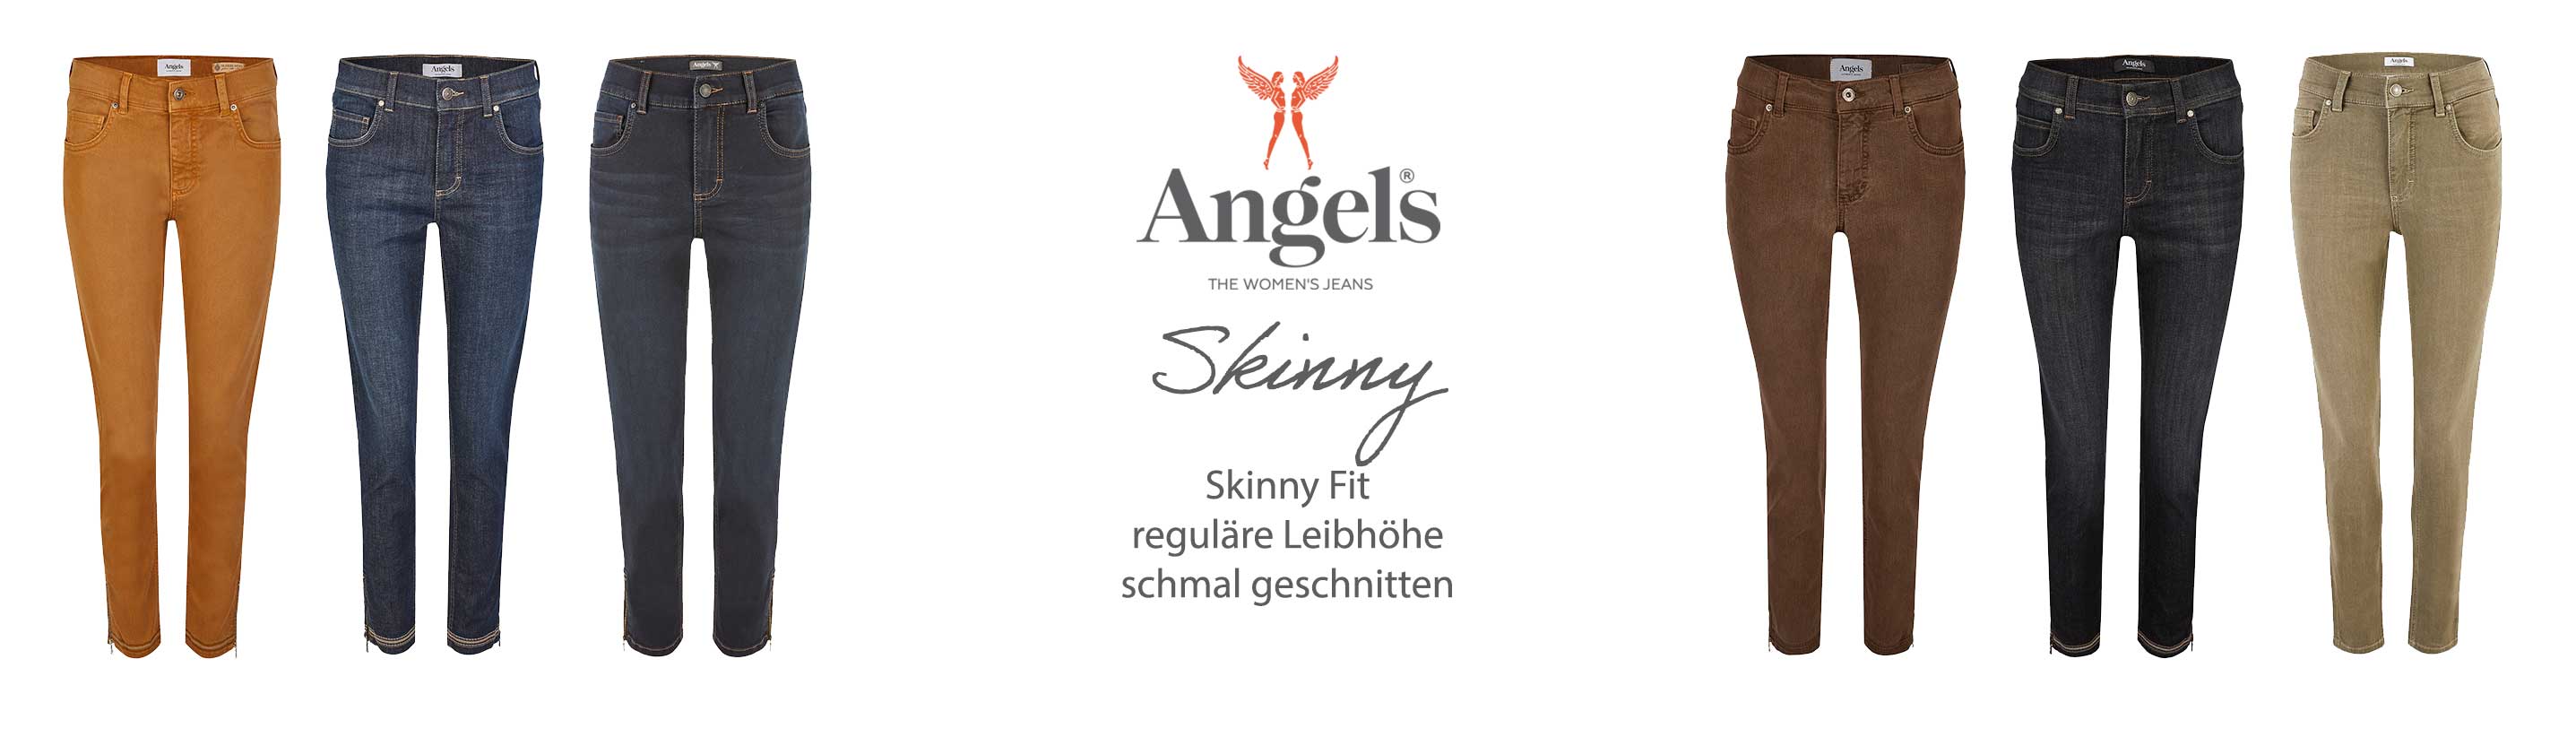 Skinny Angels